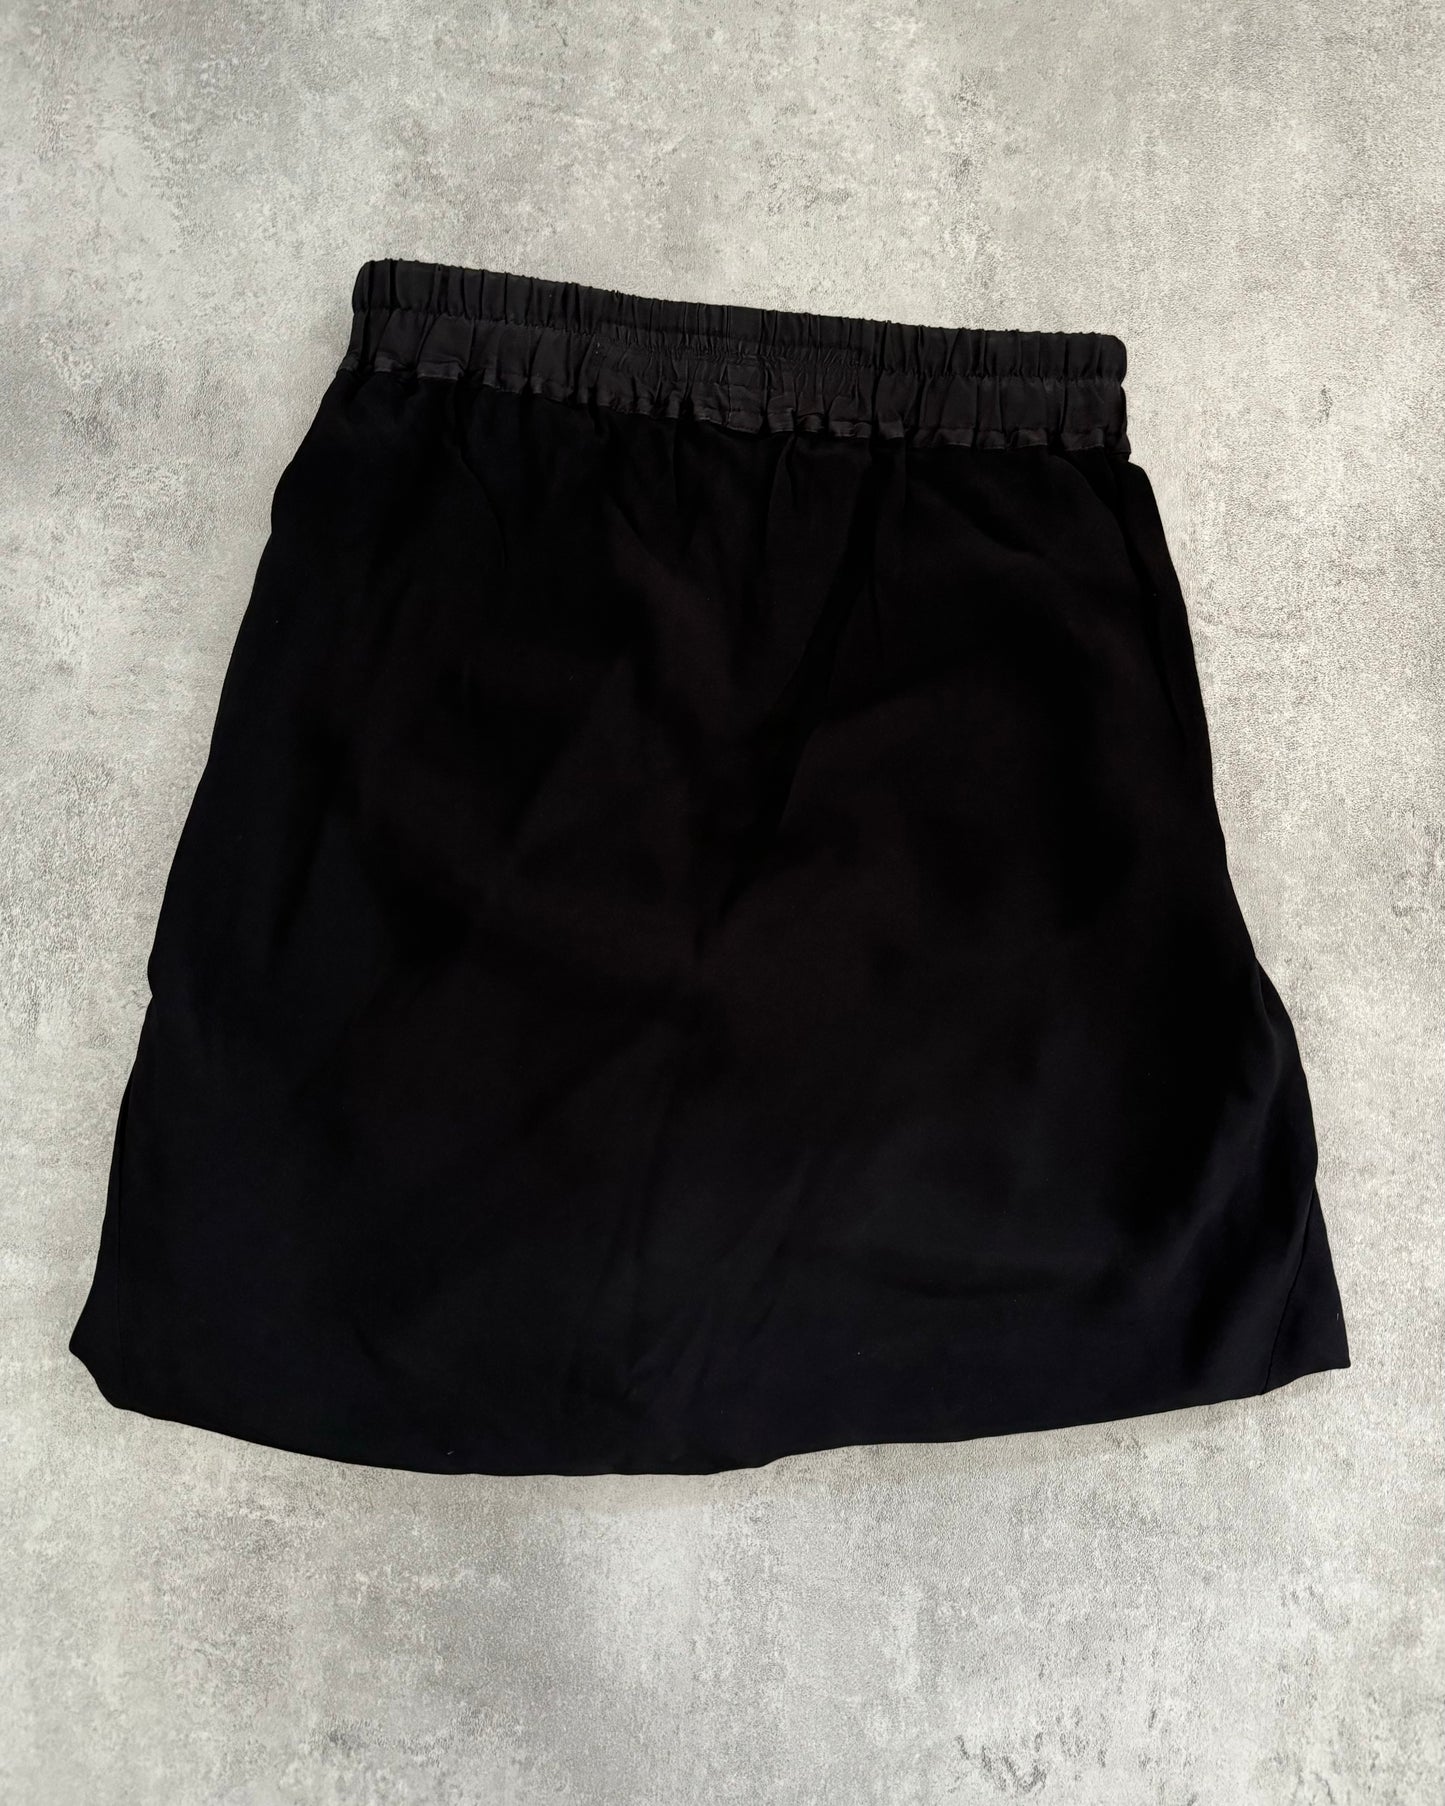 SS2013 Rick Owens Culture Dark Shorts (XS) - 3